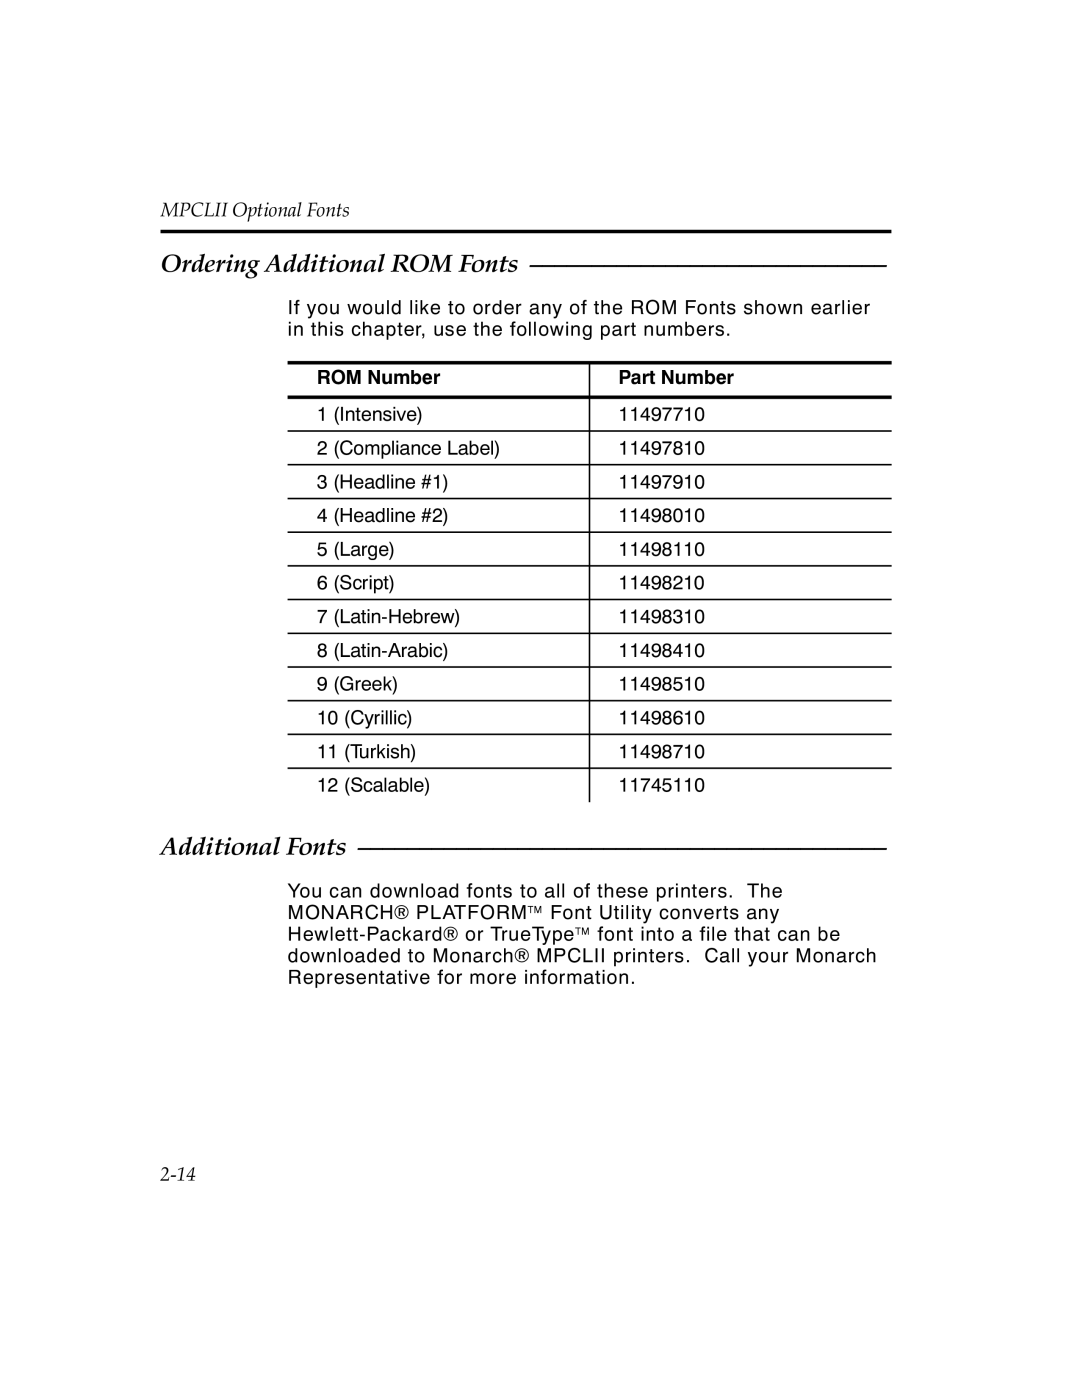 Paxar MPCL II manual Additional Fonts, ROM Number, Part Number, 2-14, Ordering Additional ROM Fonts, MPCLII Optional Fonts 